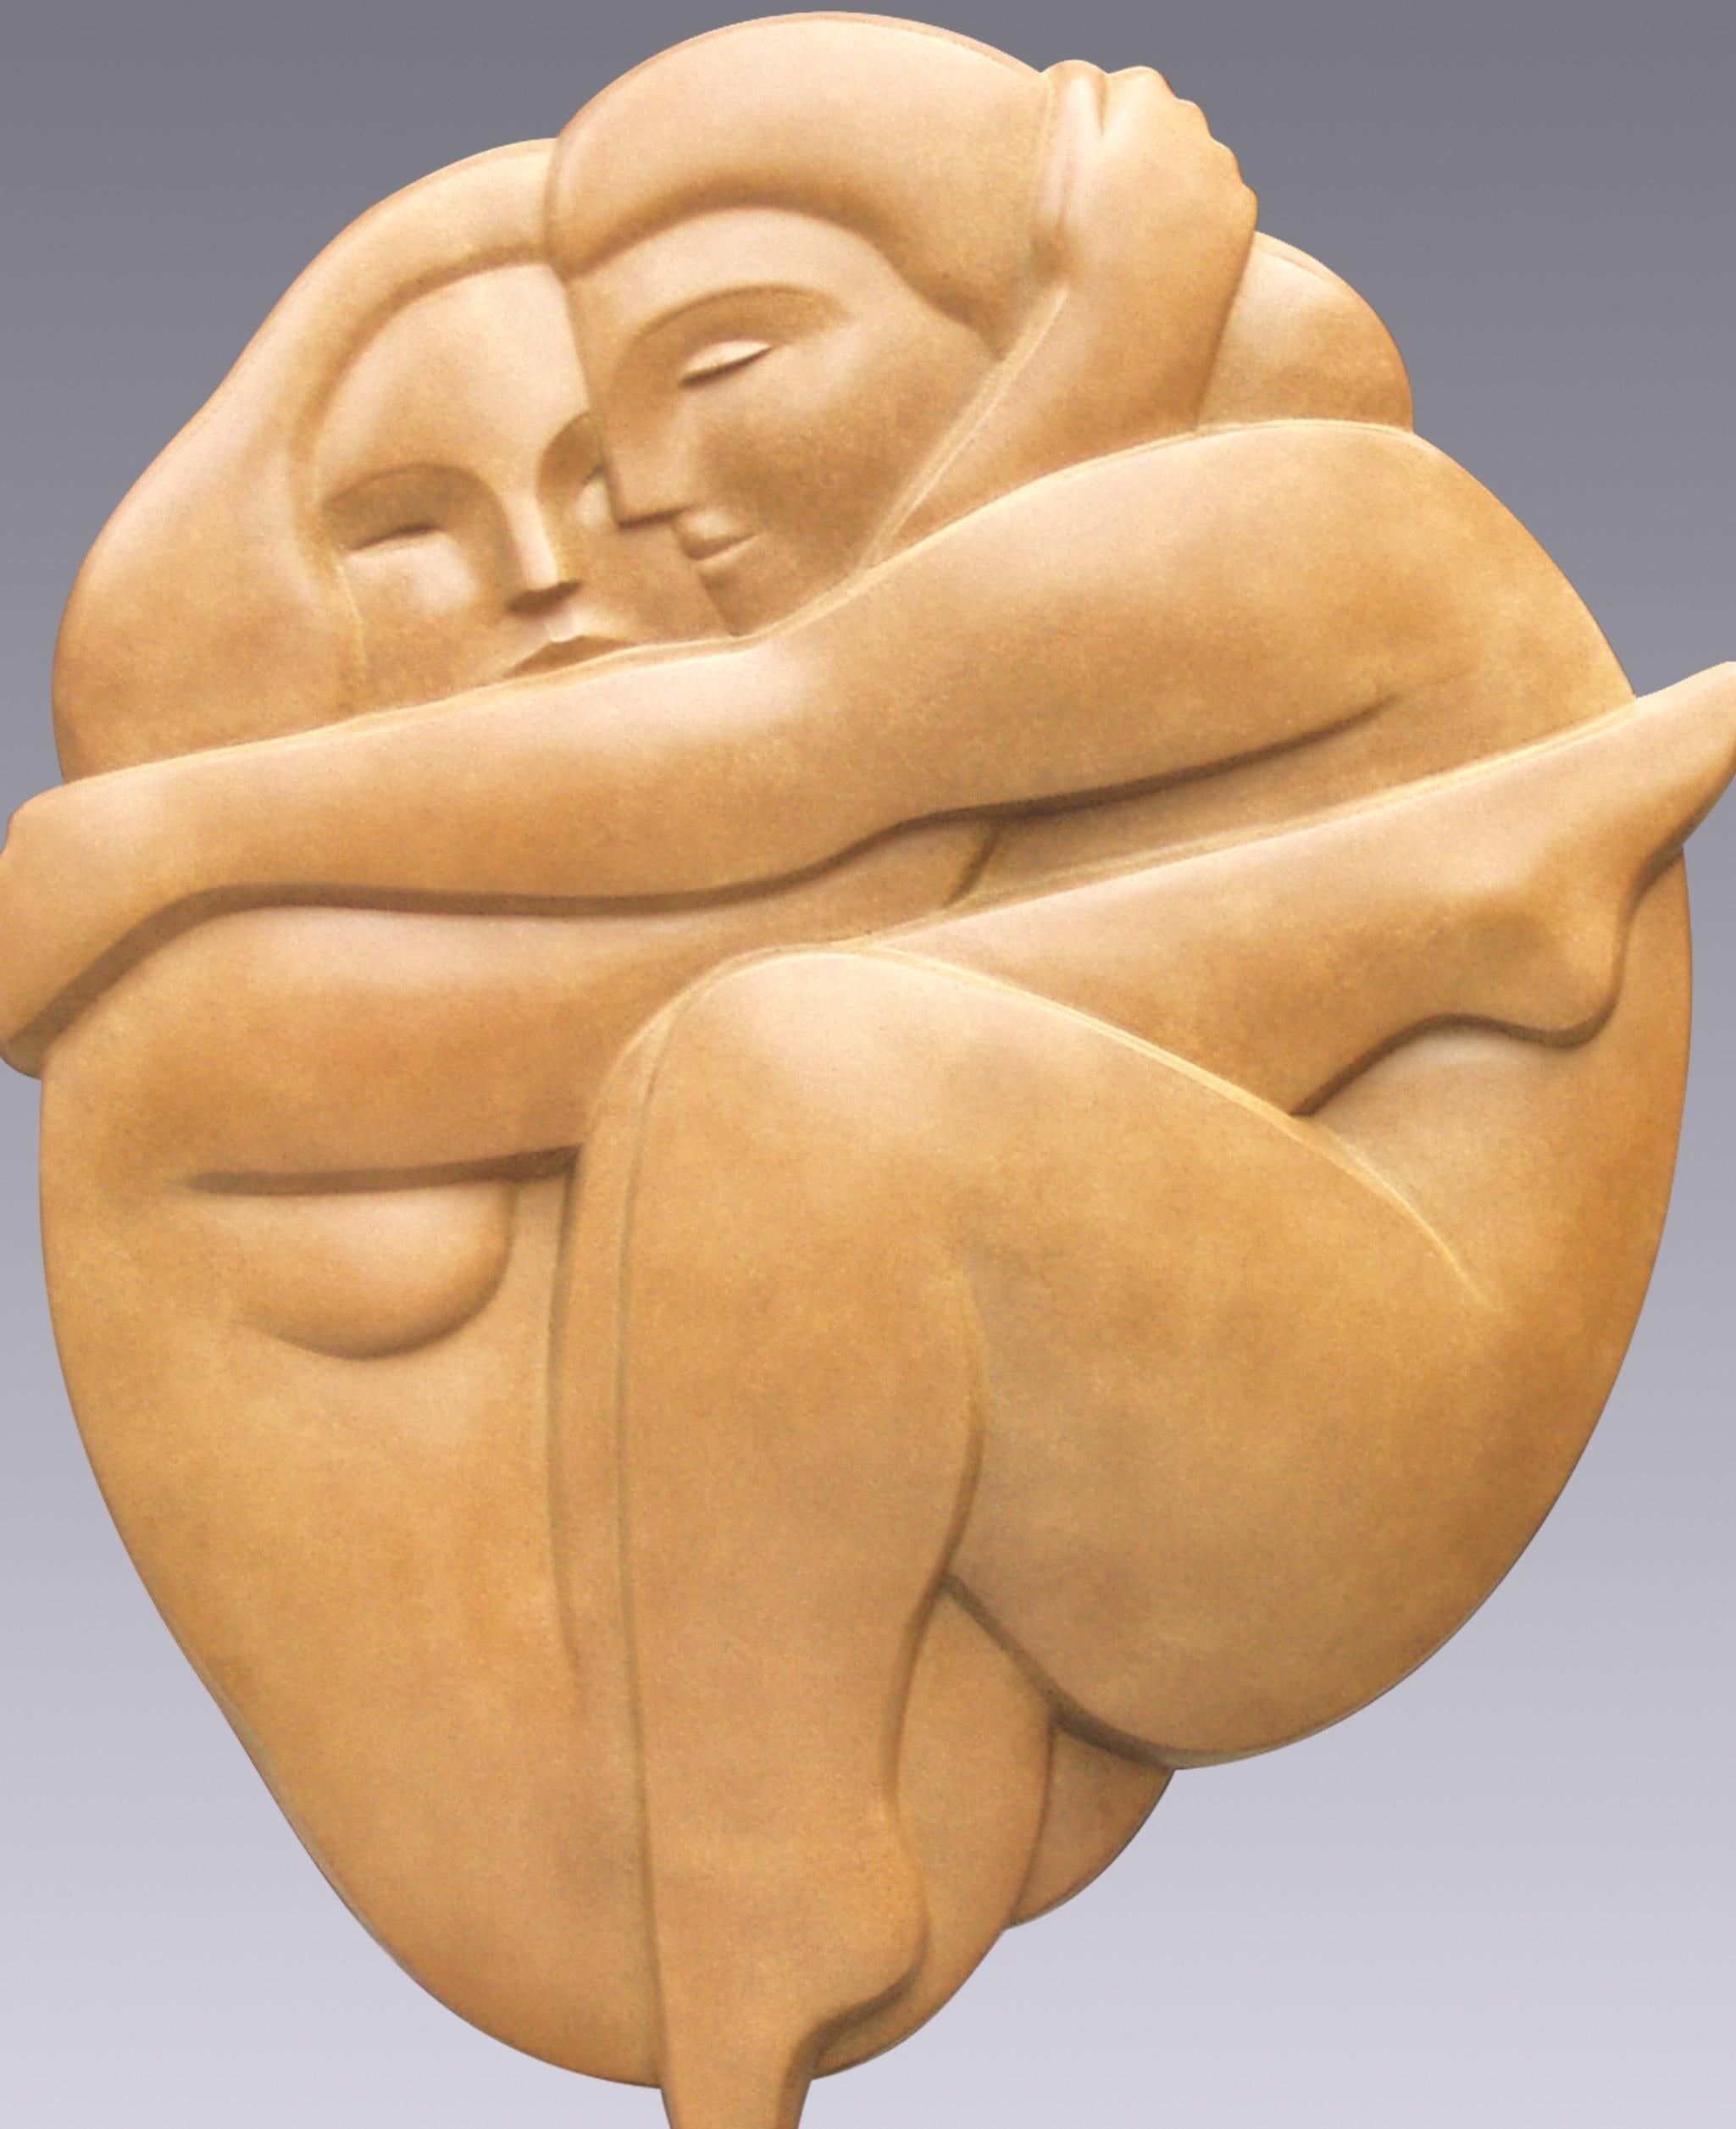 the embrace sculpture photo